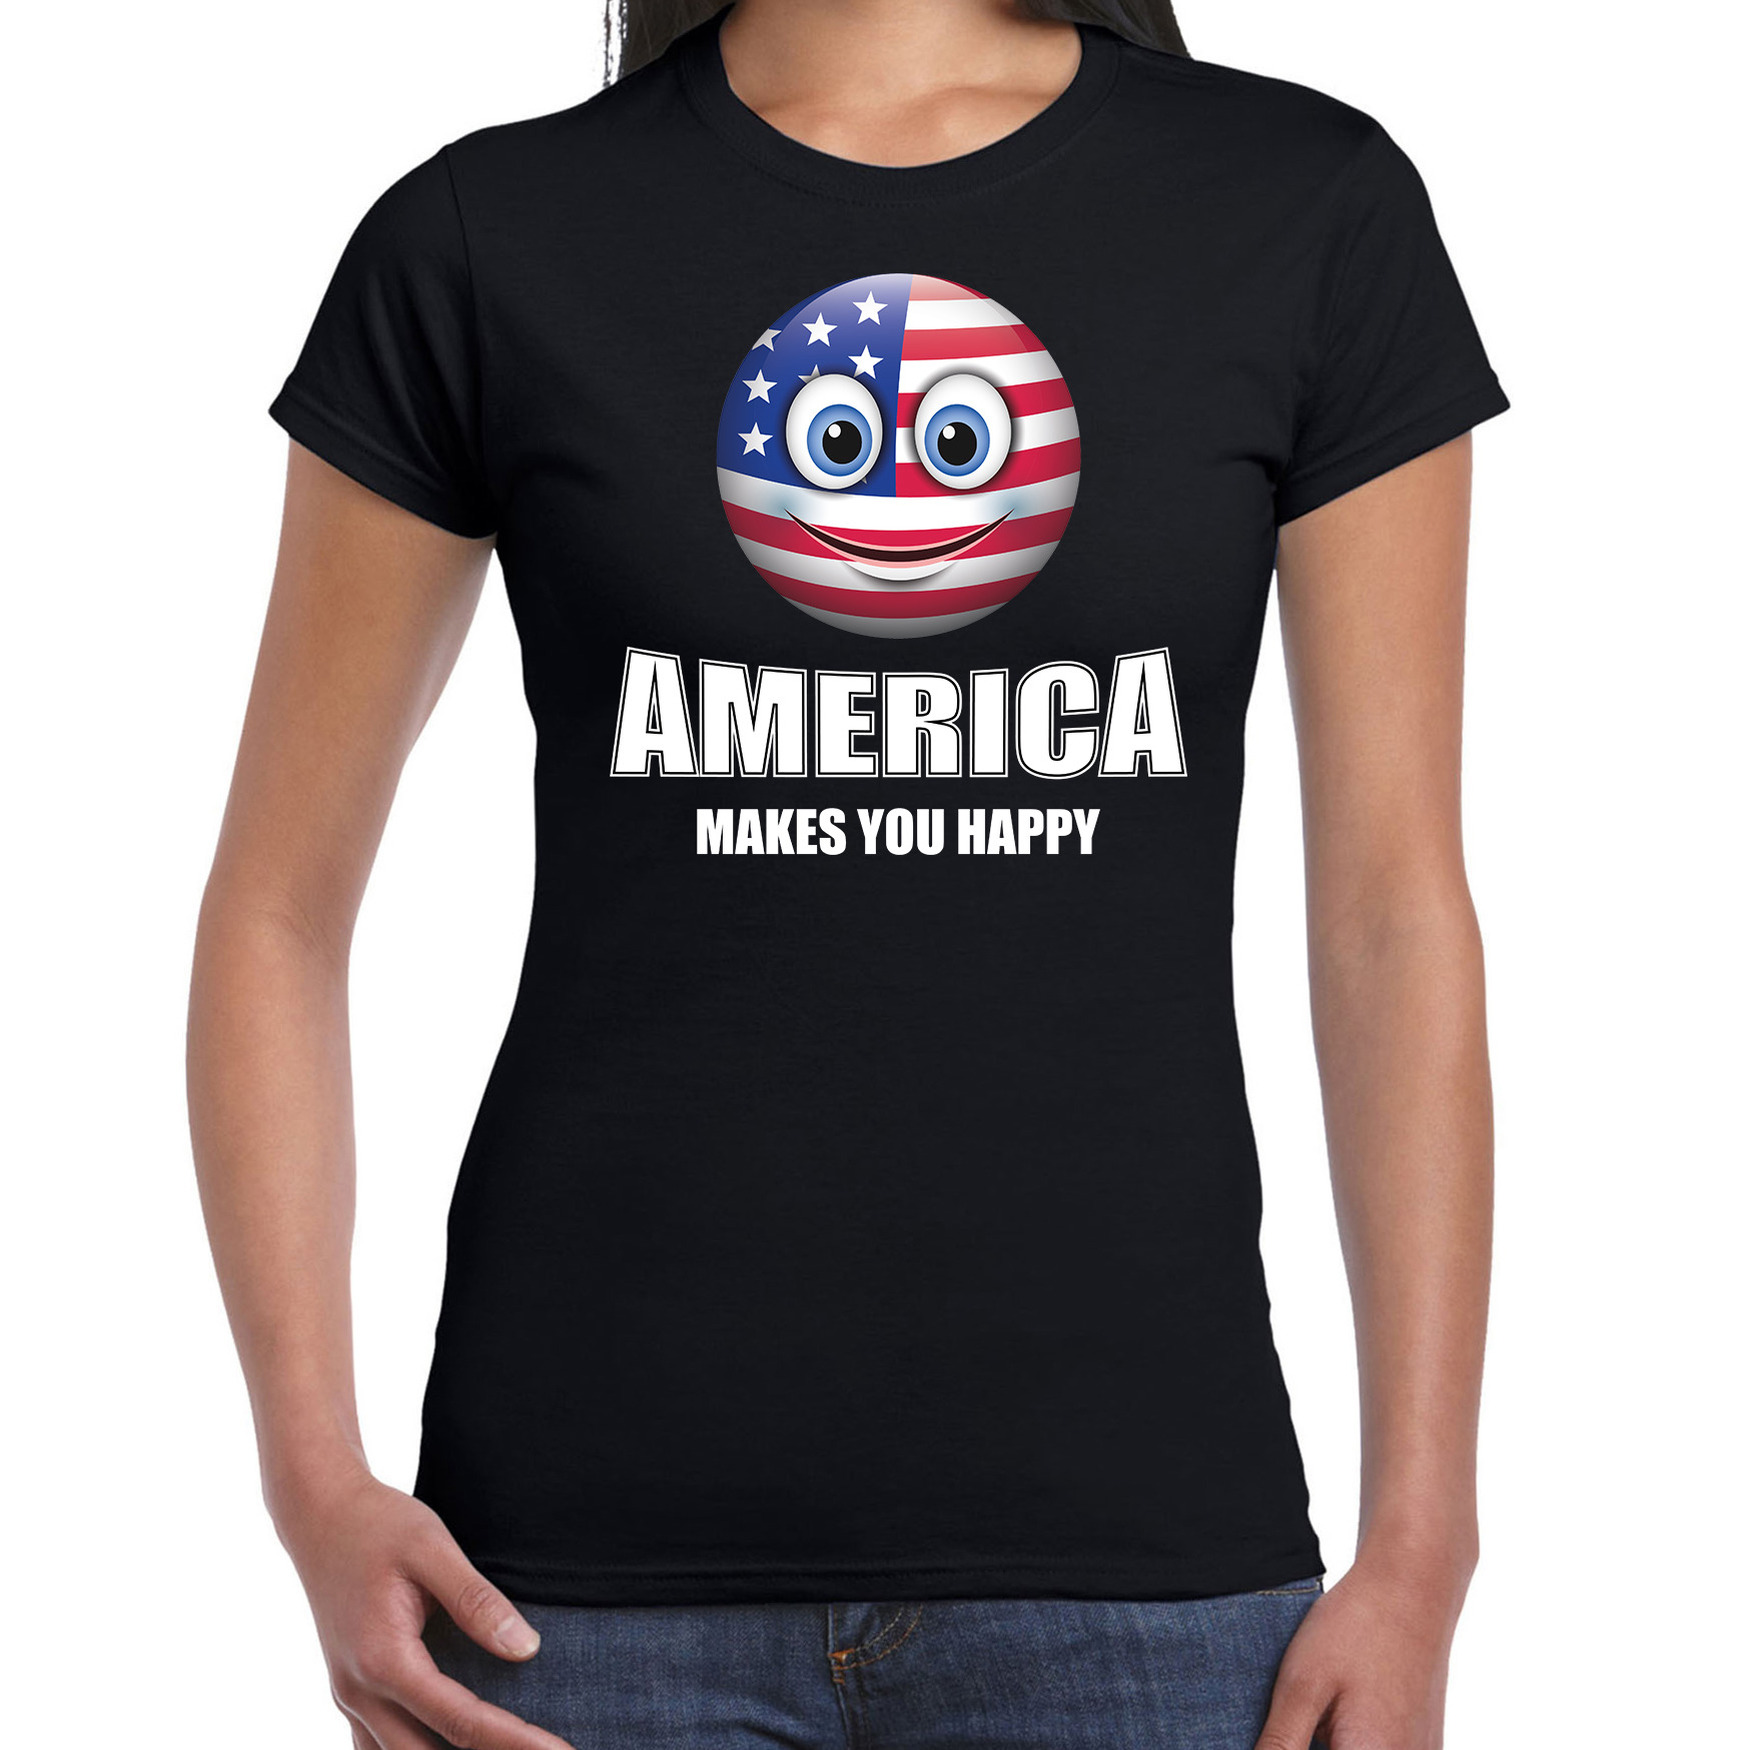 America makes you happy landen t-shirt Amerika zwart voor dames met emoticon